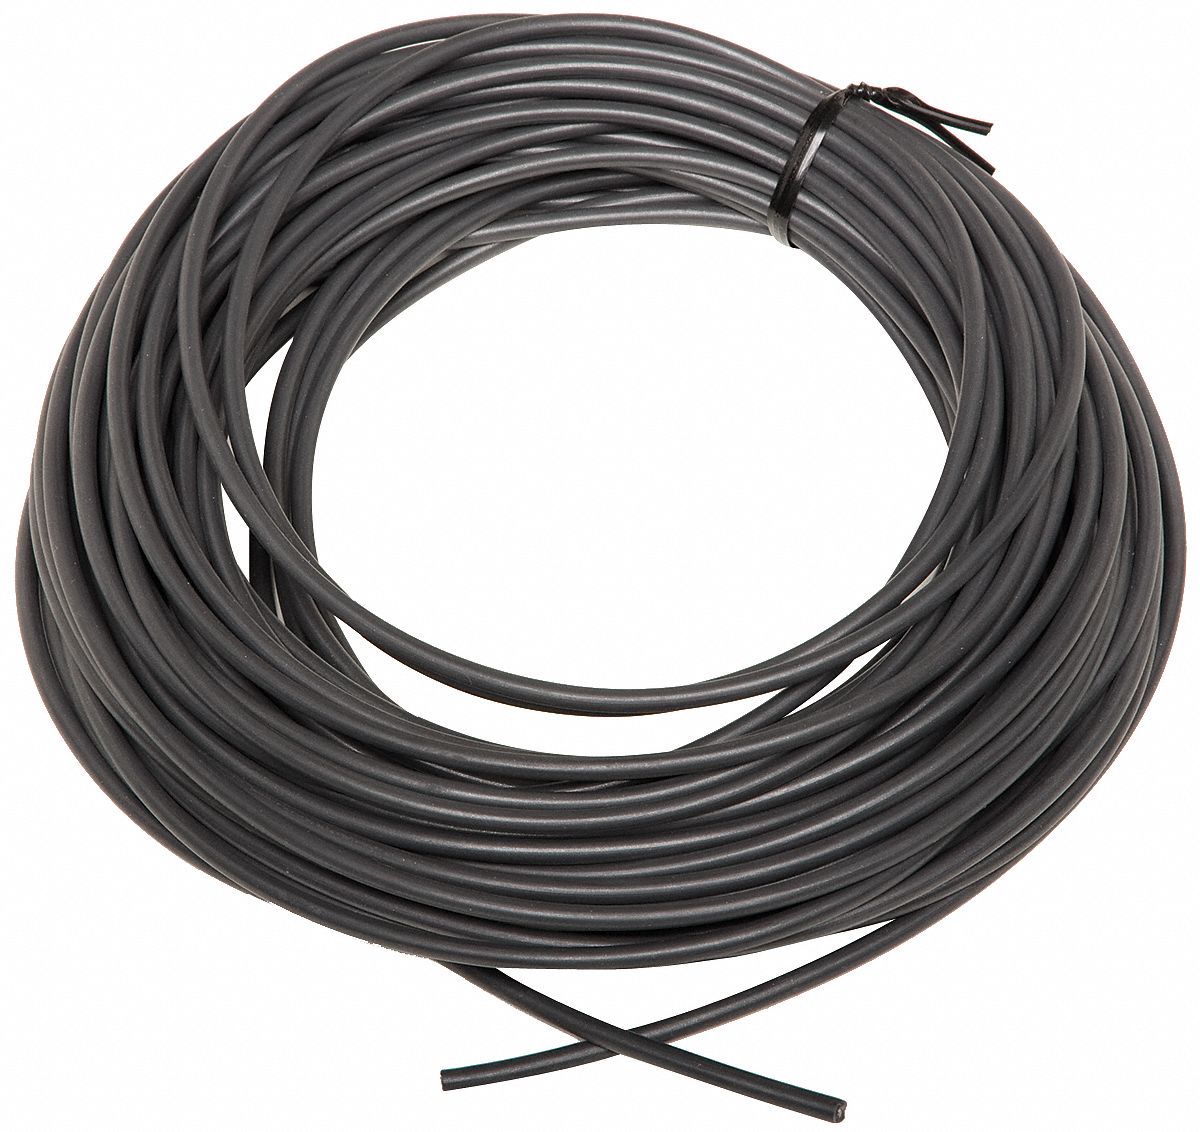 5TXC1 - Test Lead Wire 18 AWG 50 Ft Black